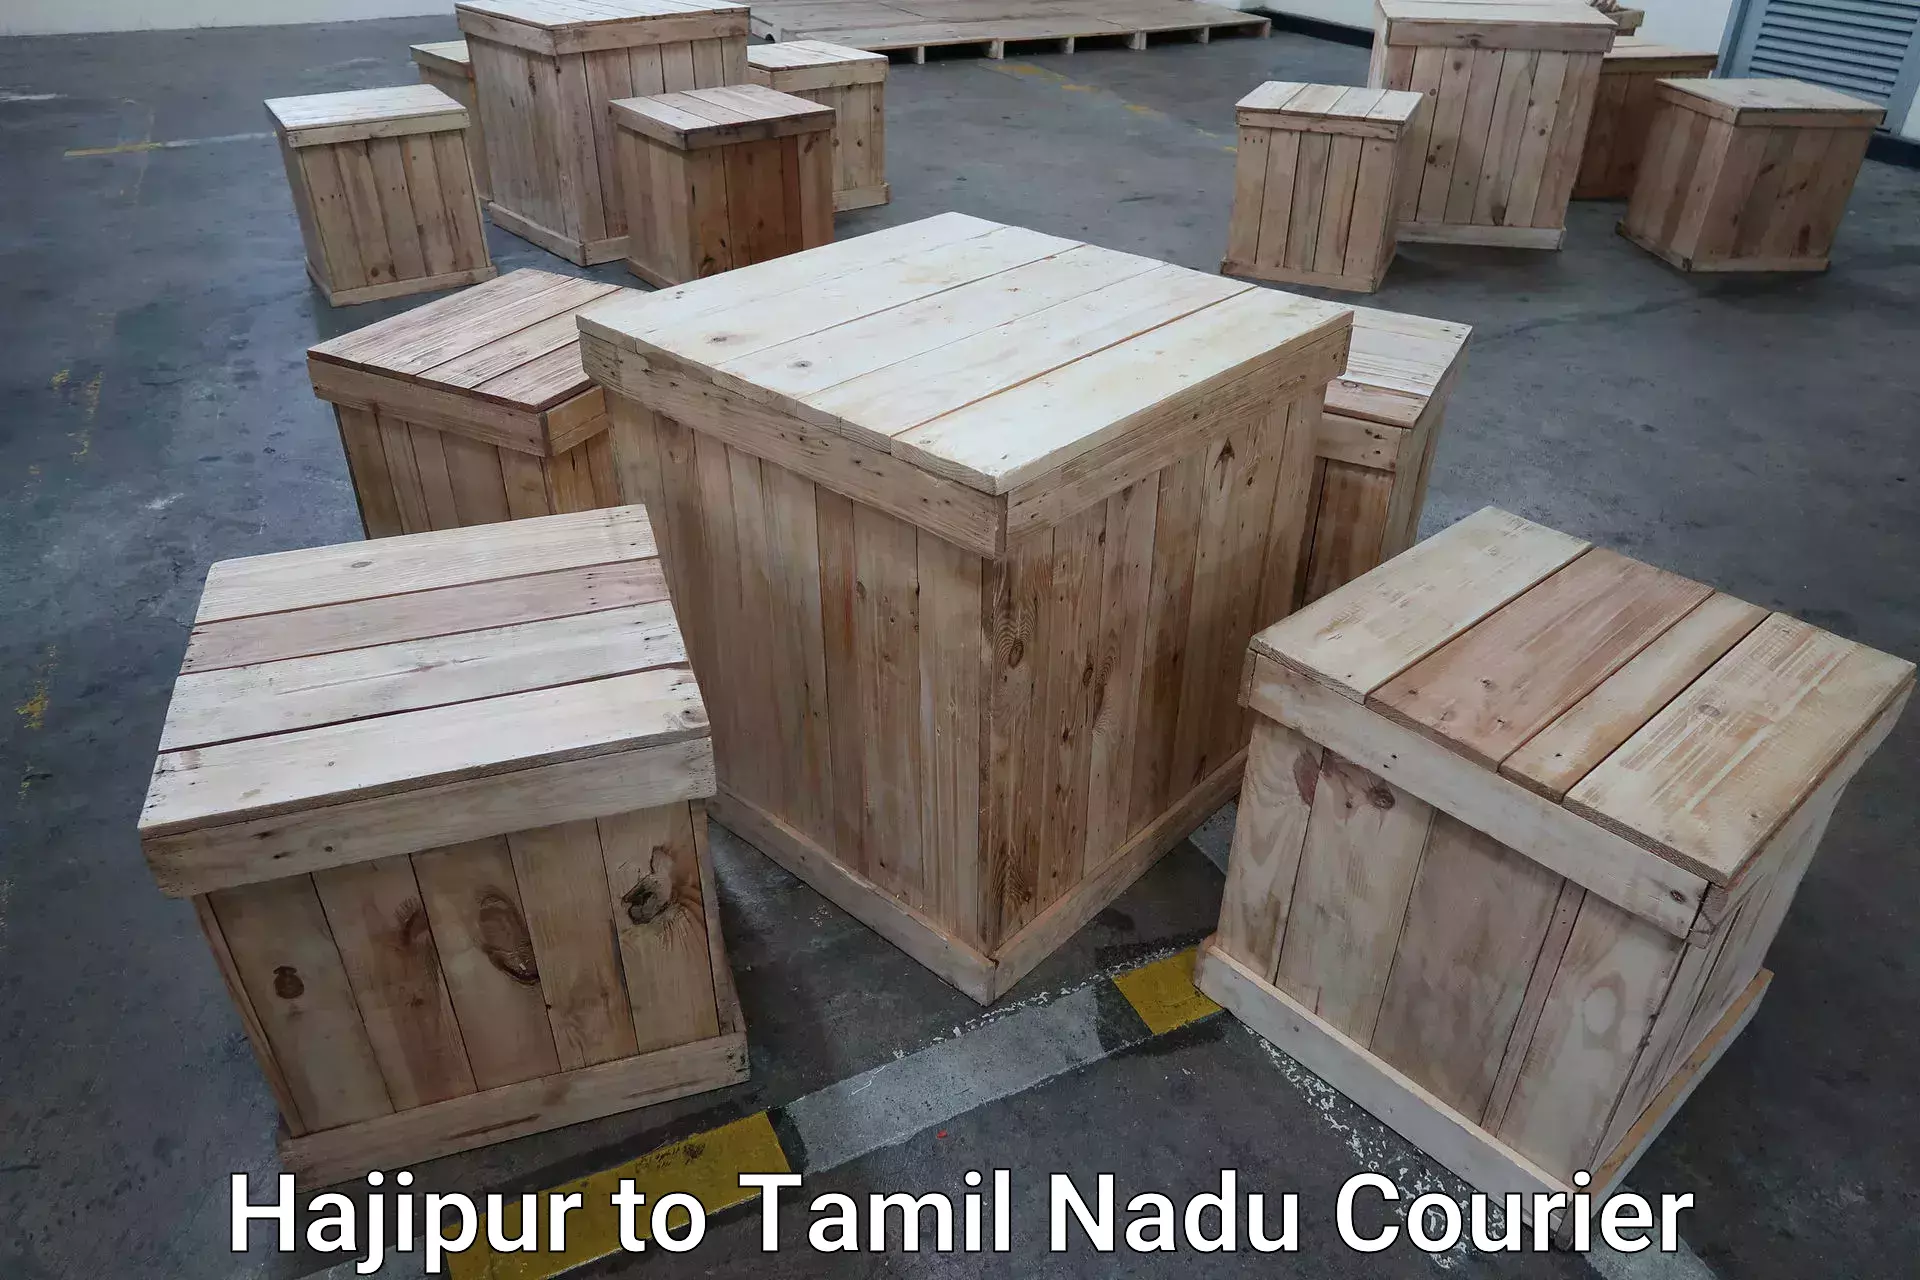 Luggage shipment specialists Hajipur to Tamil Nadu